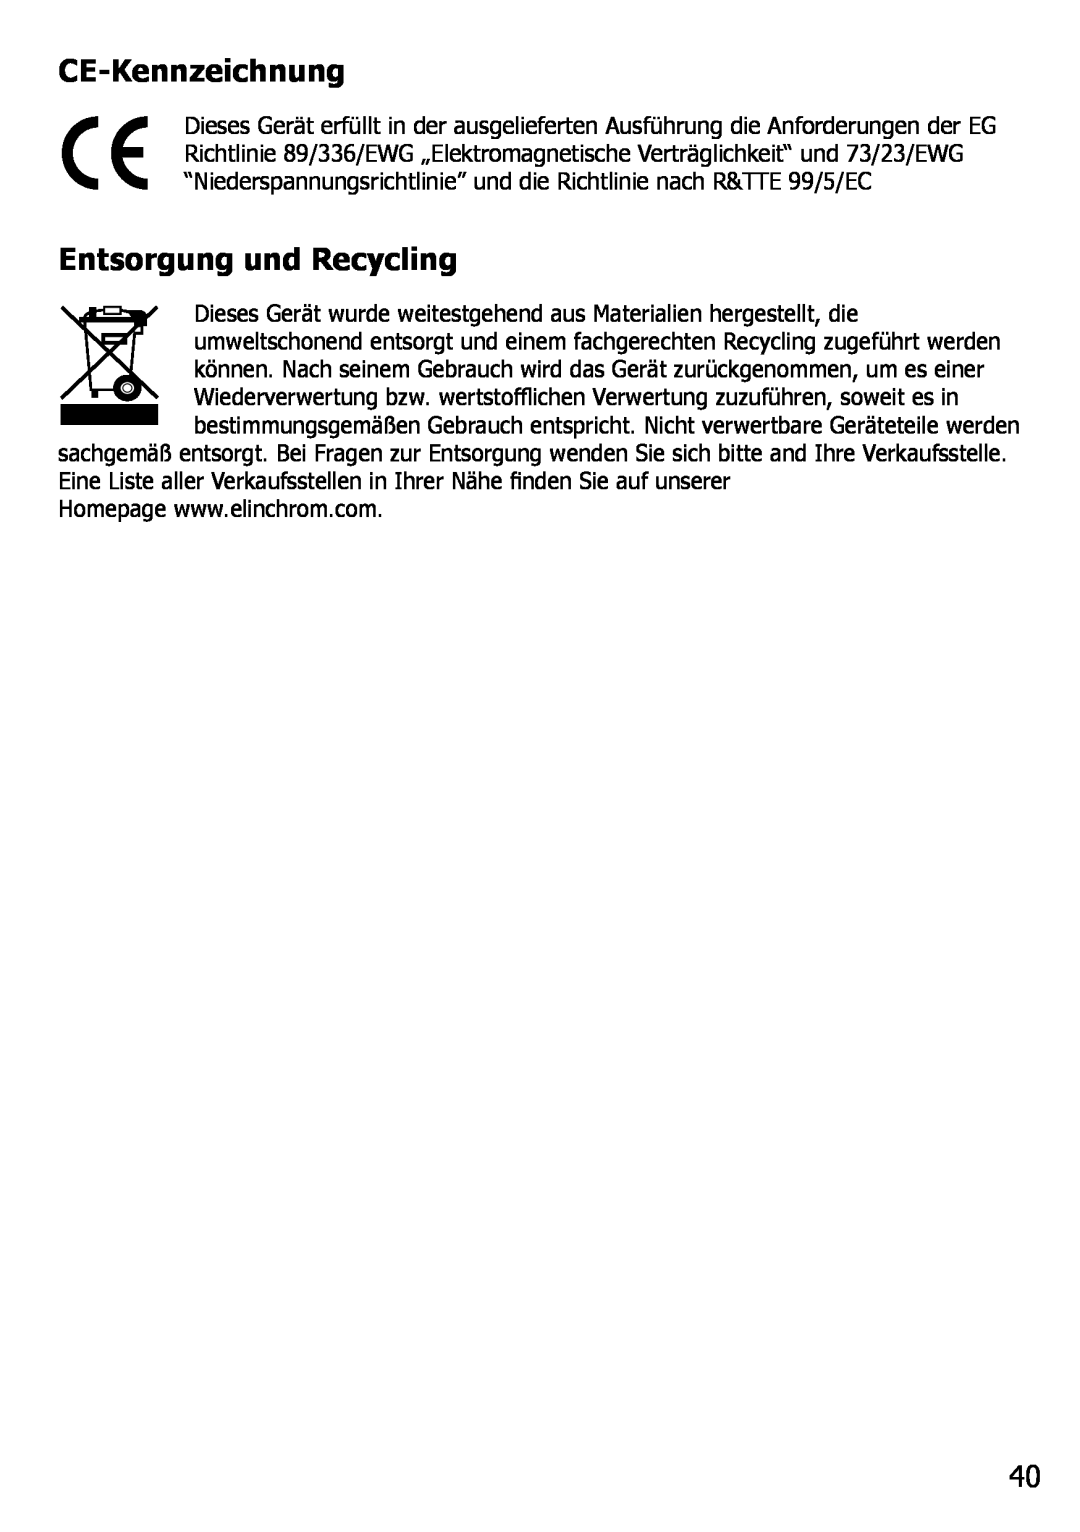 Elinchrom 4 IT, 2 IT operation manual CE-Kennzeichnung, Entsorgung und Recycling 